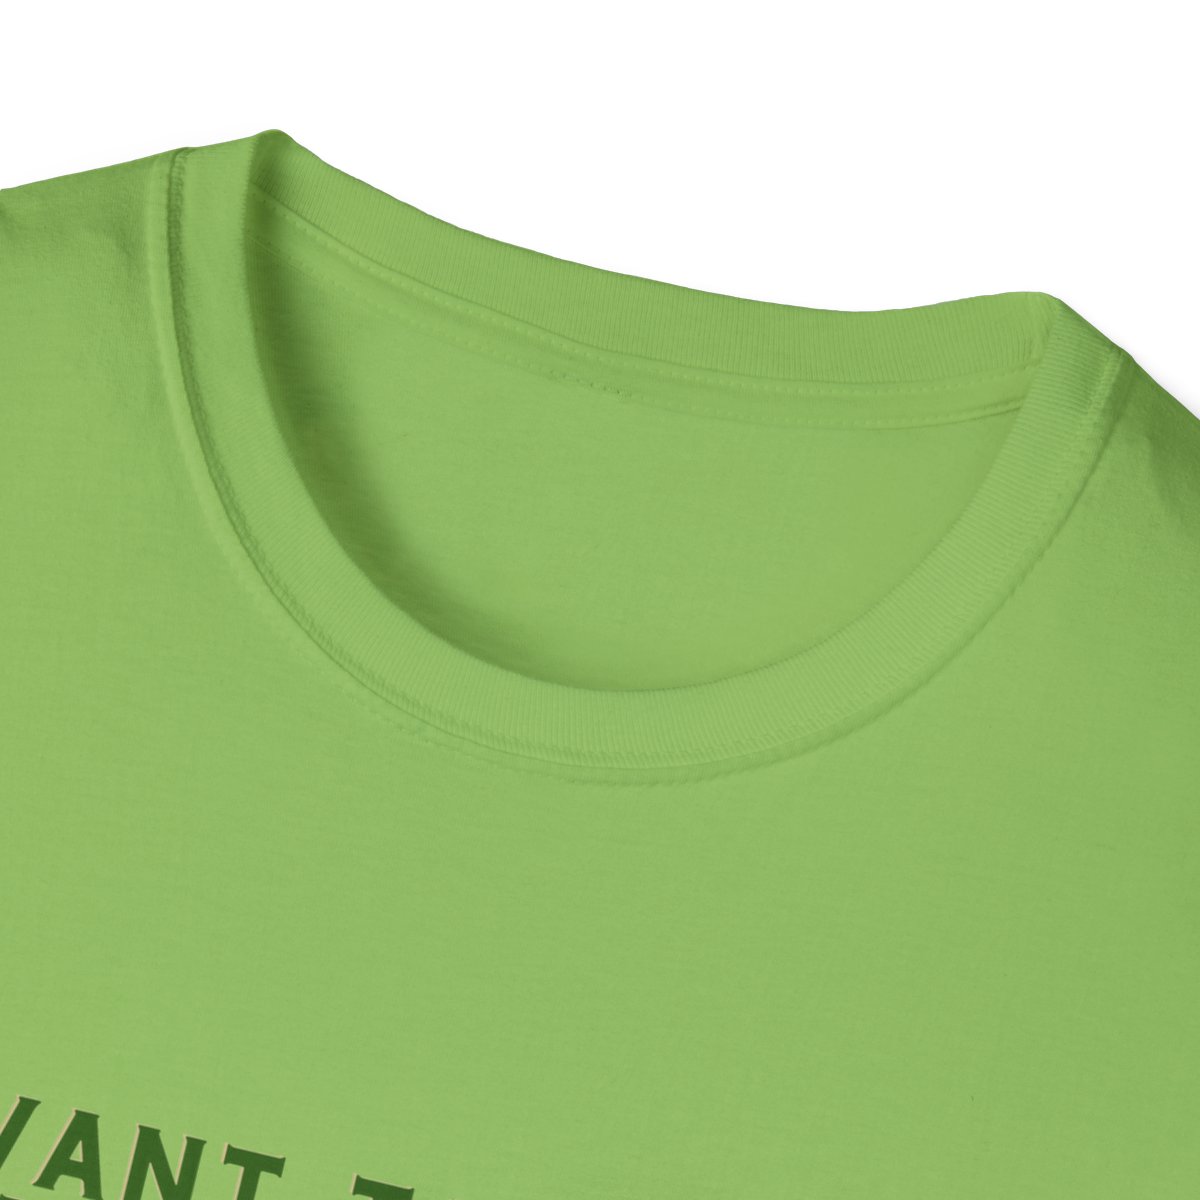 Capital Wasteland - Save the Planet T-Shirt product thumbnail image